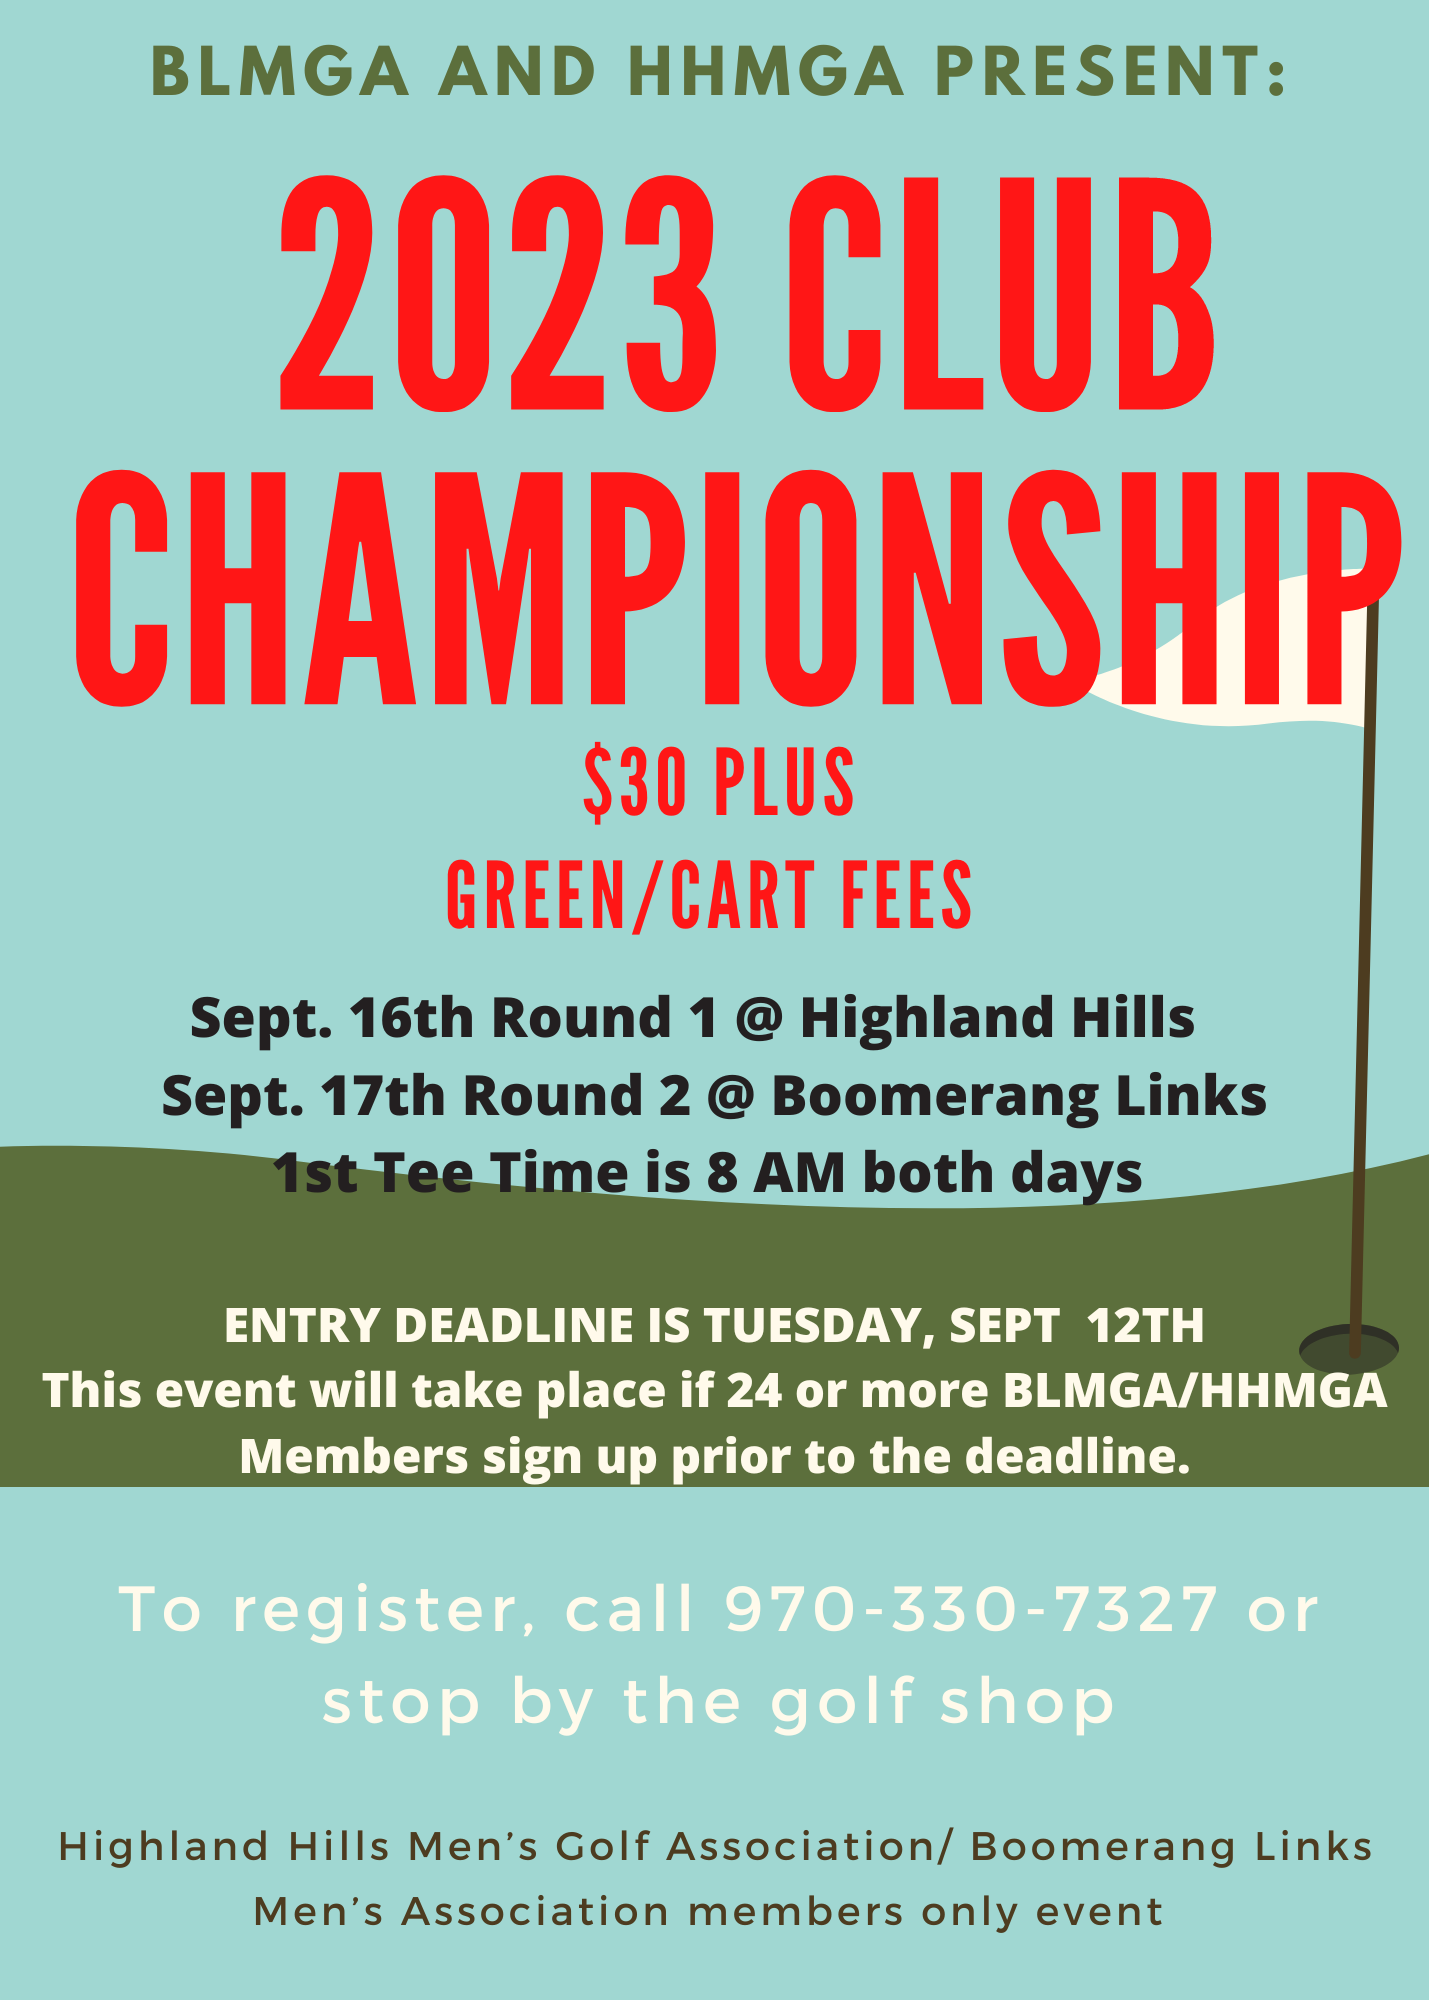 Club Championship 2023 Highland Hills Men's Golf Association